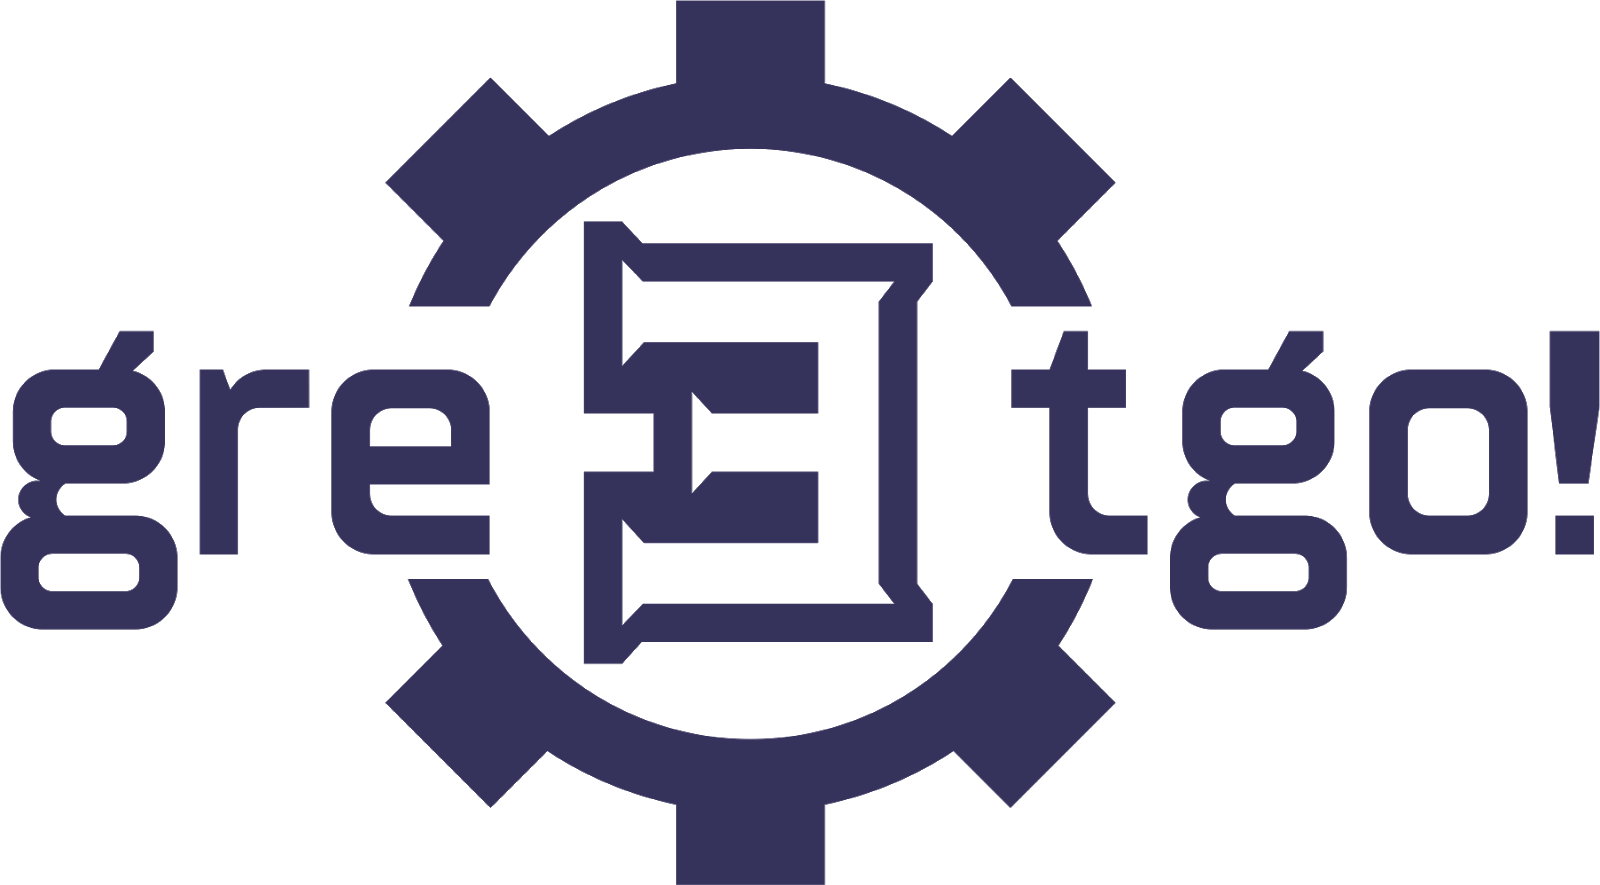 greetgo! LLC logo